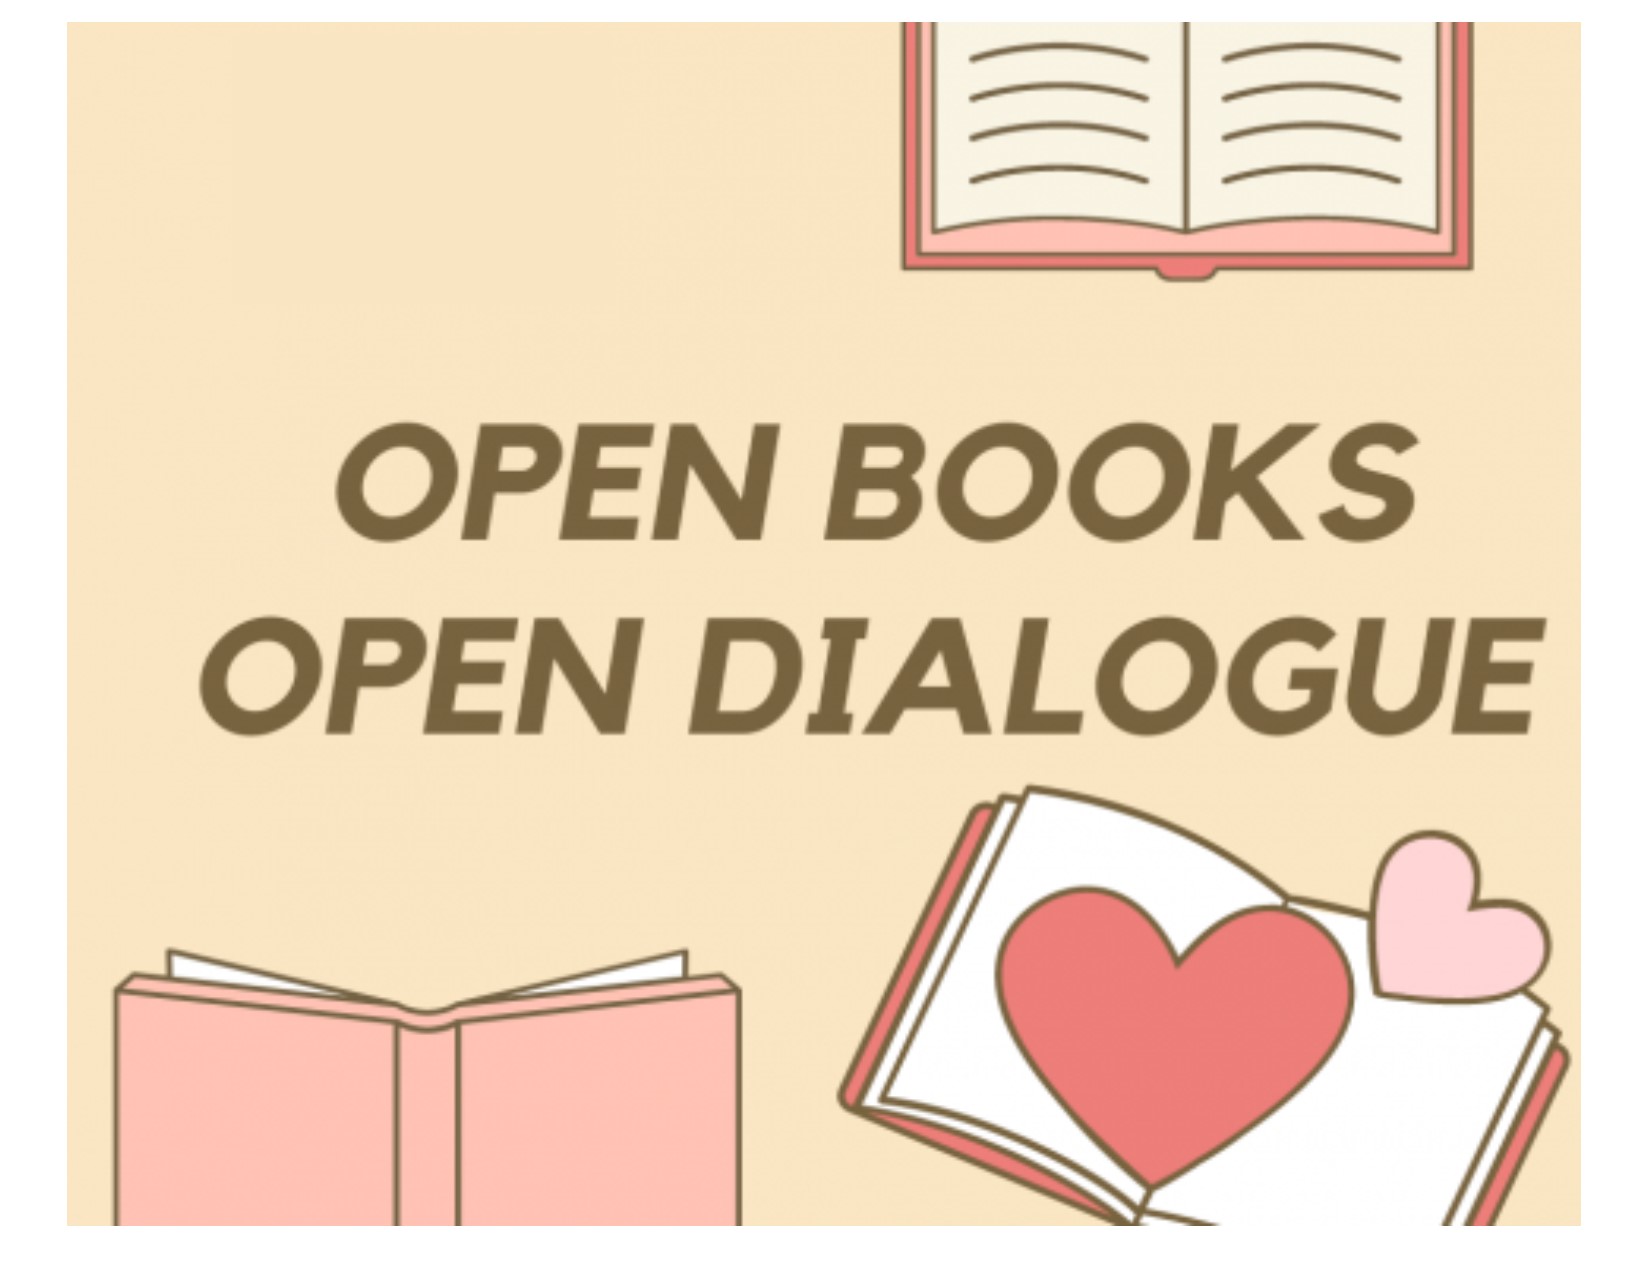 Open Books, Open Dialogue